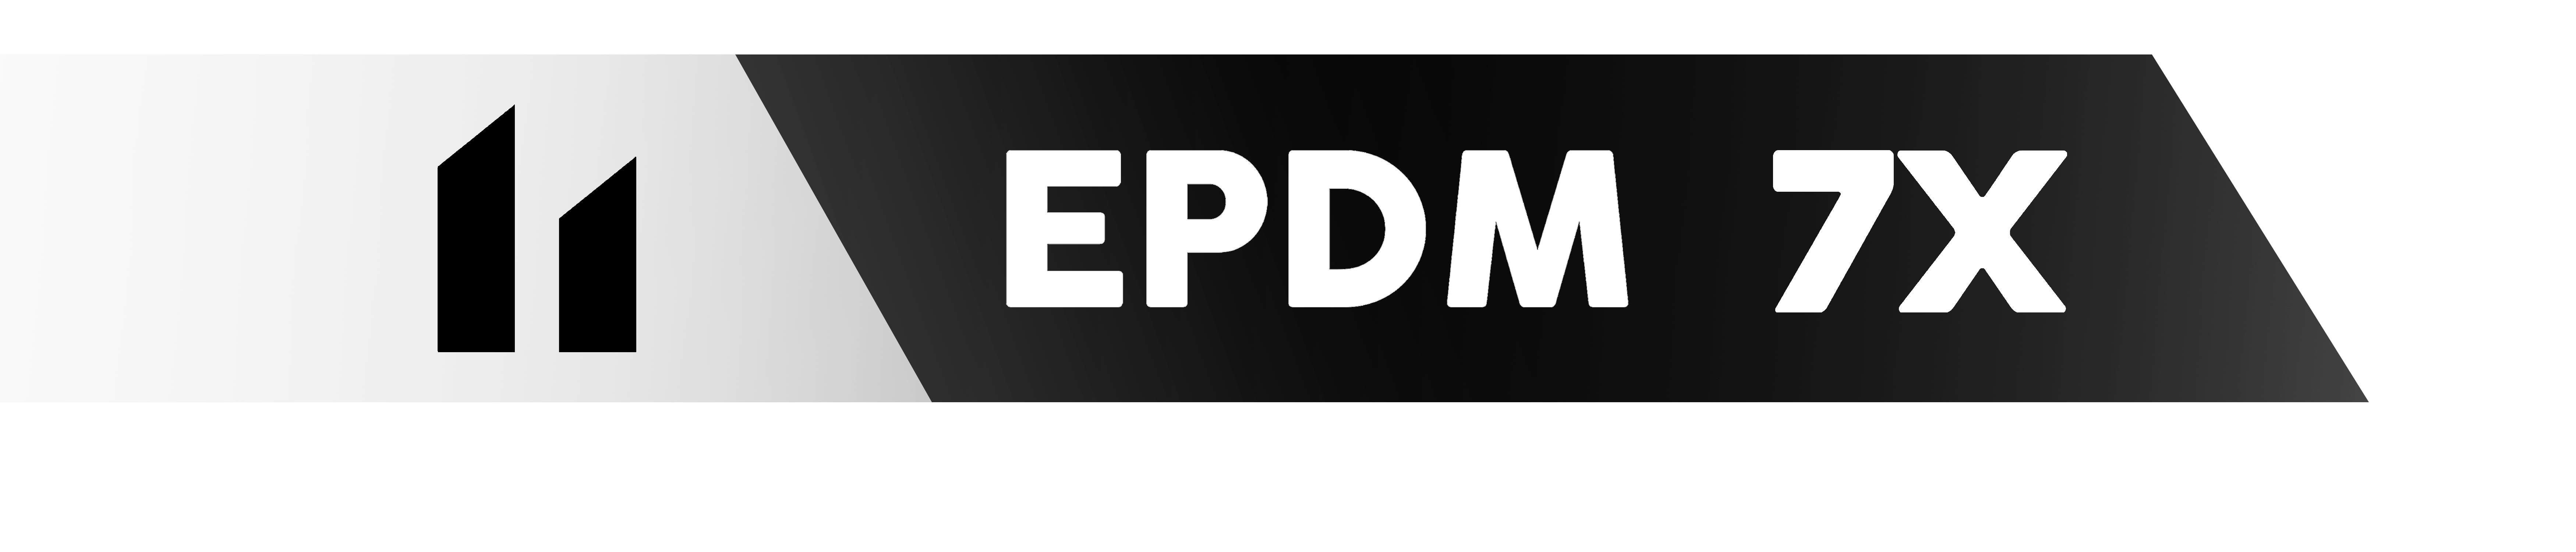 EPDM 7X